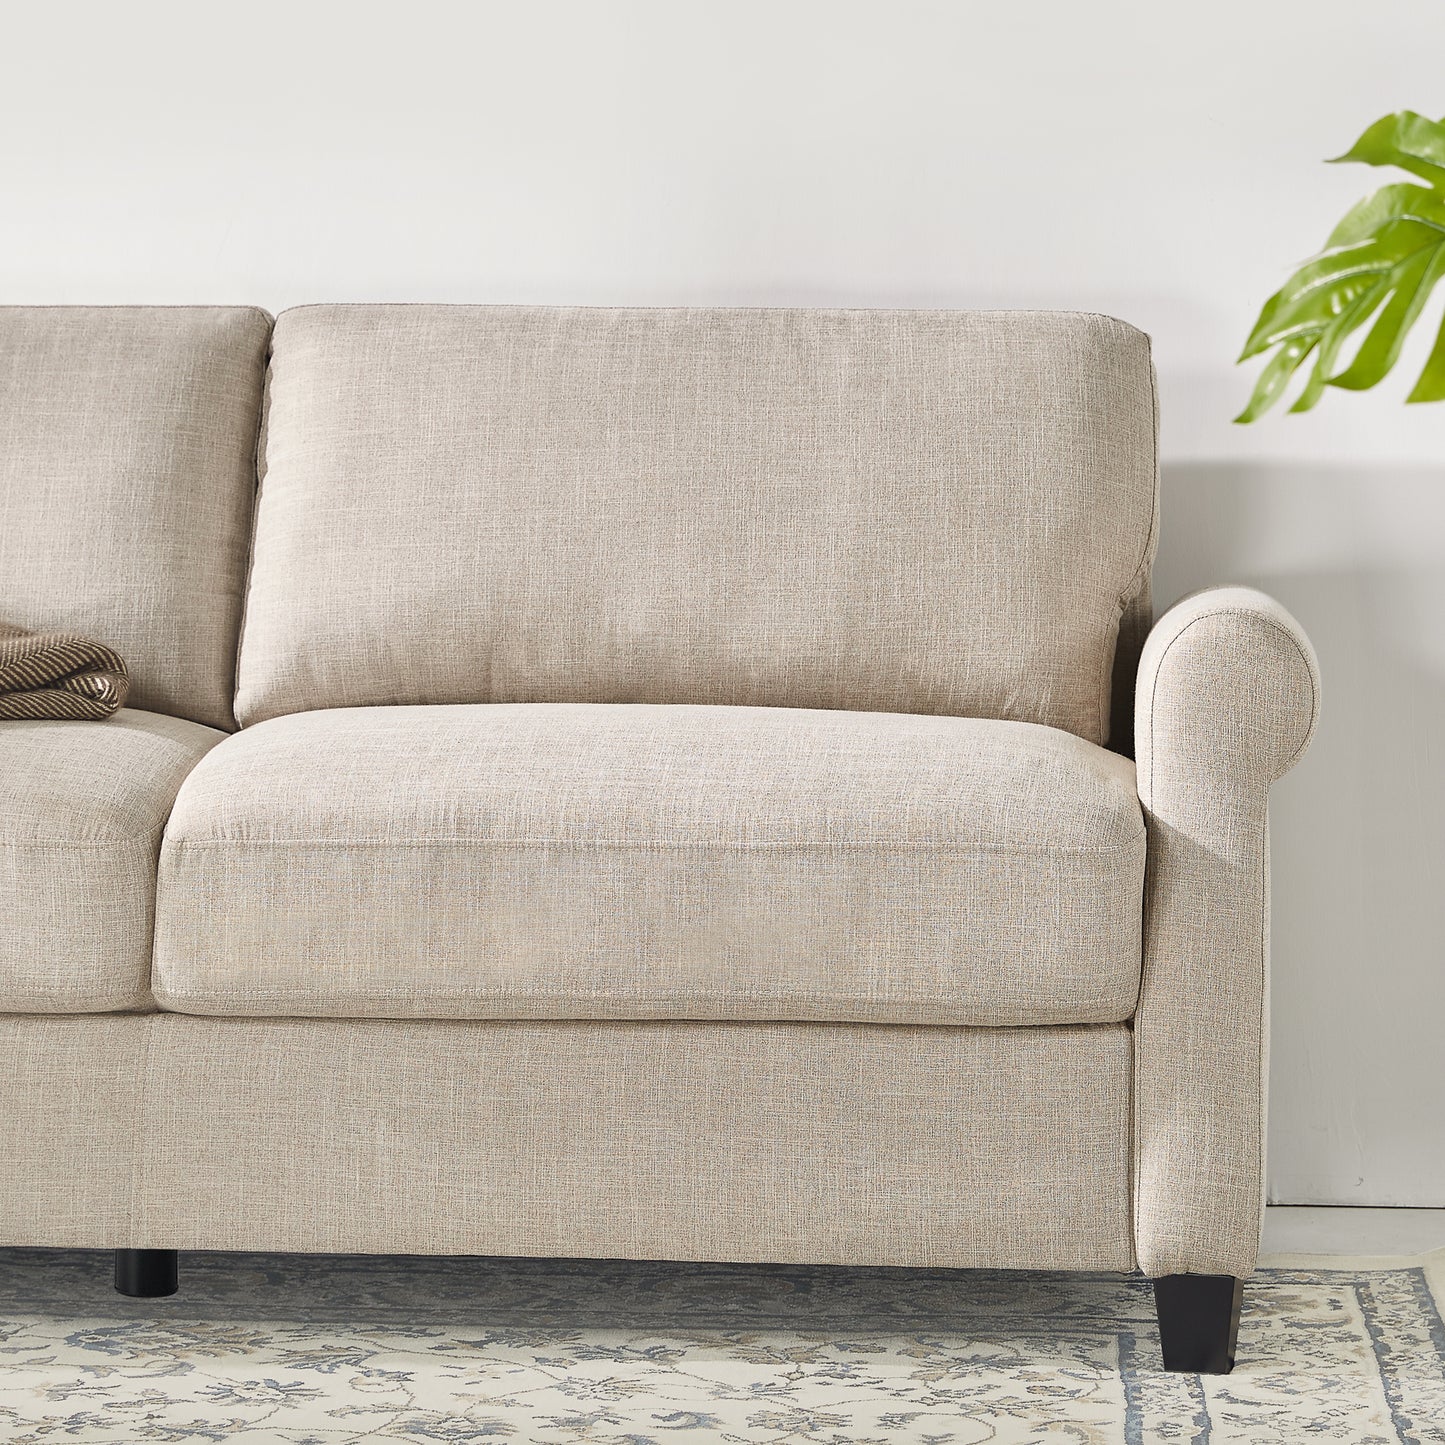 Josh Contemporary Upholstered Sofa - Beige